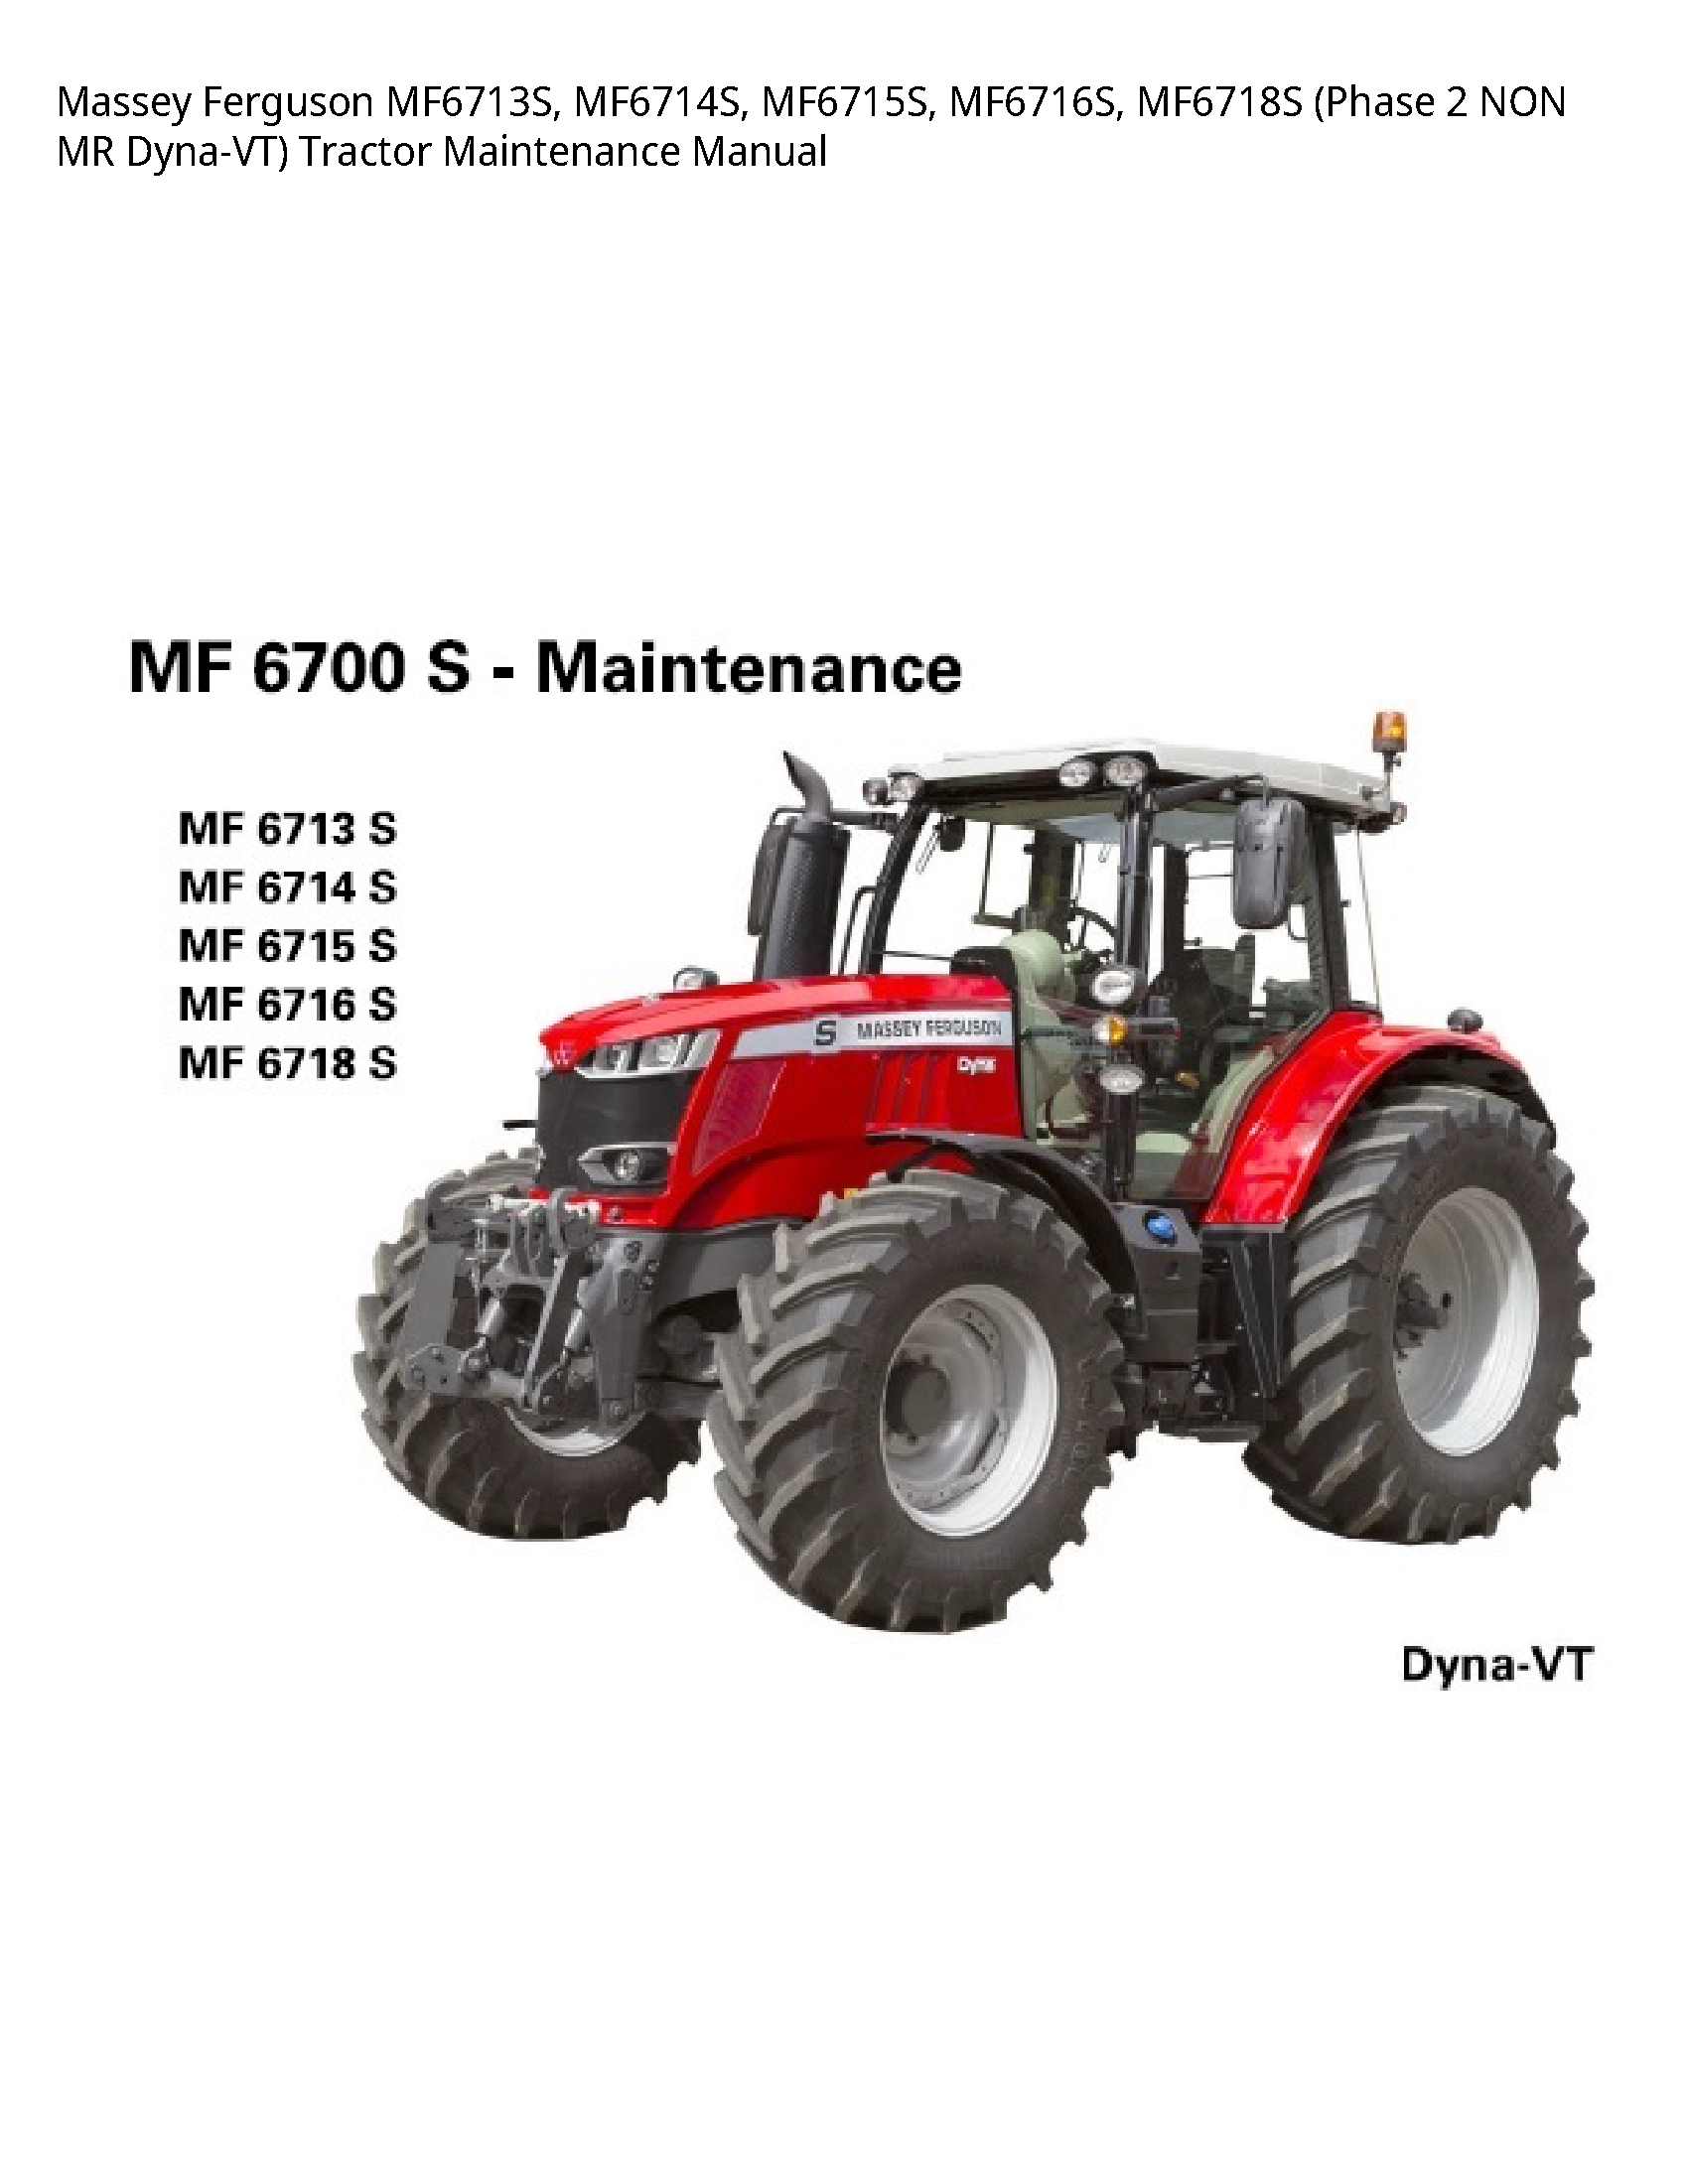 Massey Ferguson MF6713S (Phase NON MR Dyna-VT) Tractor Maintenance manual